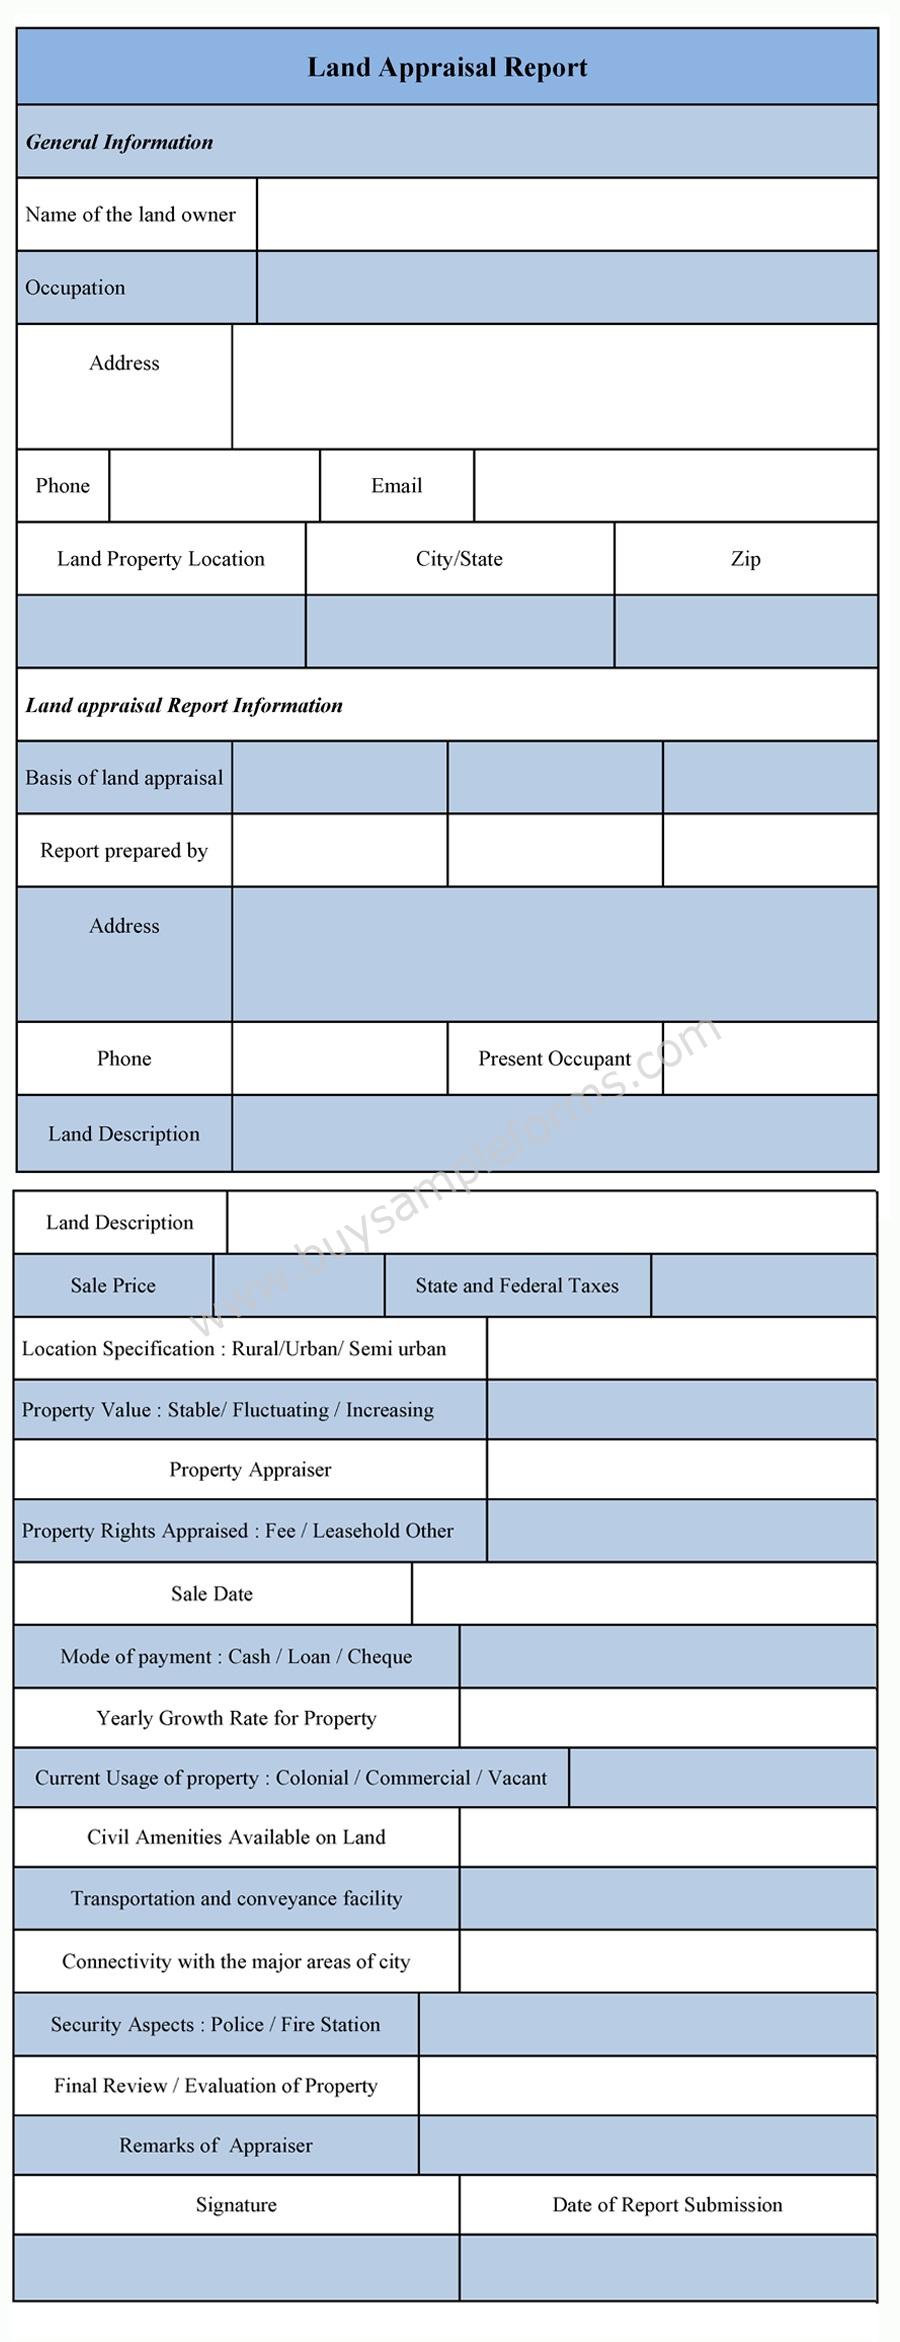 Land Appraisal Report Form